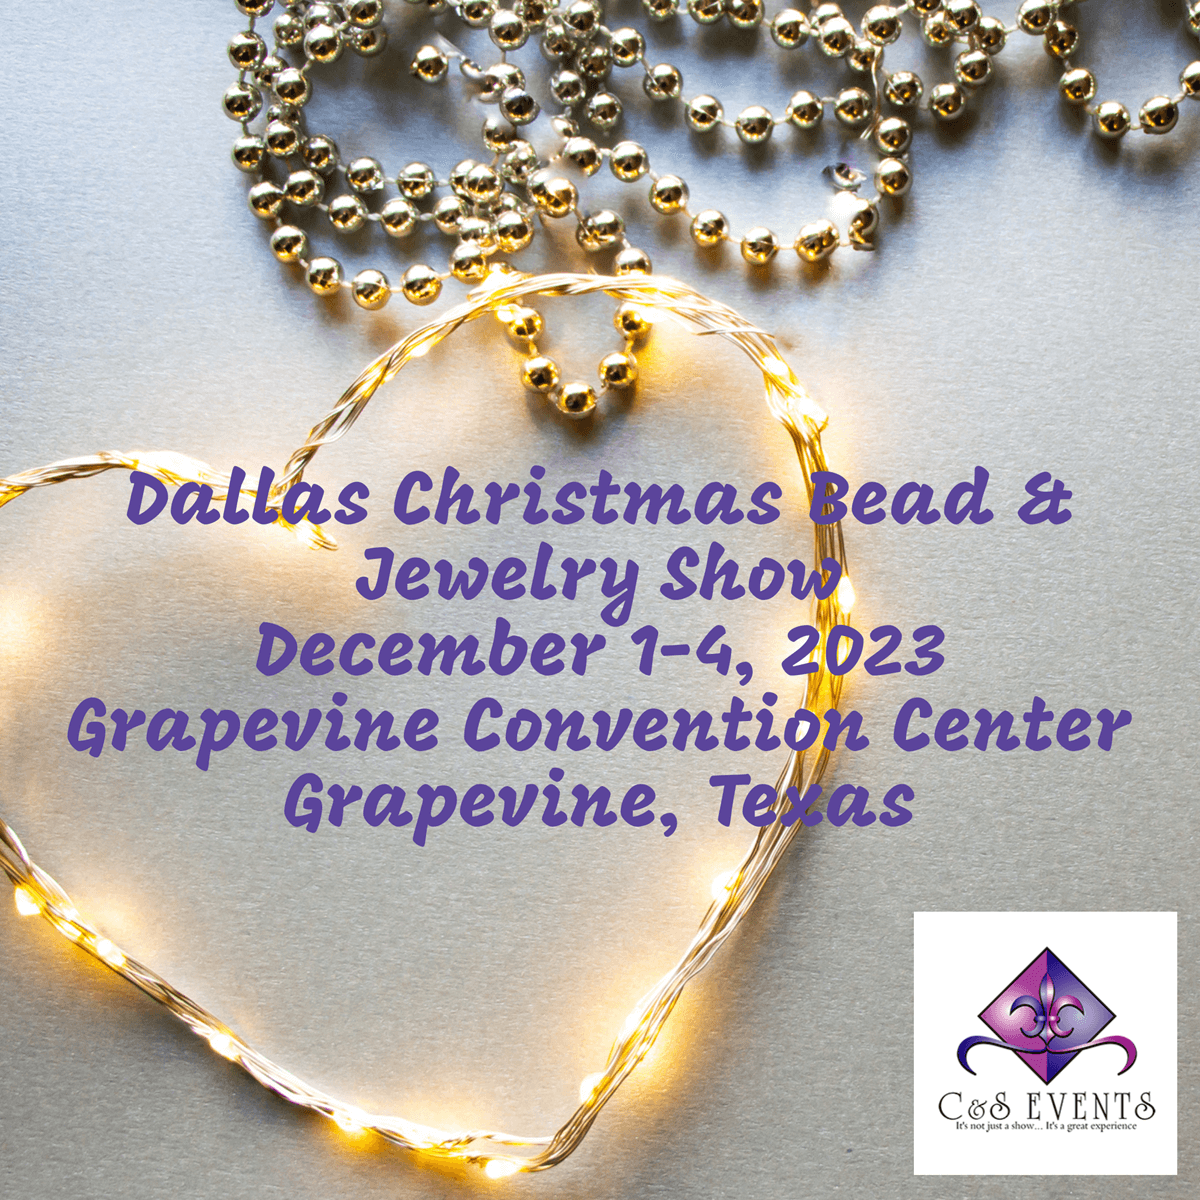 Dallas Christmas Bead & Jewelry Show 2023